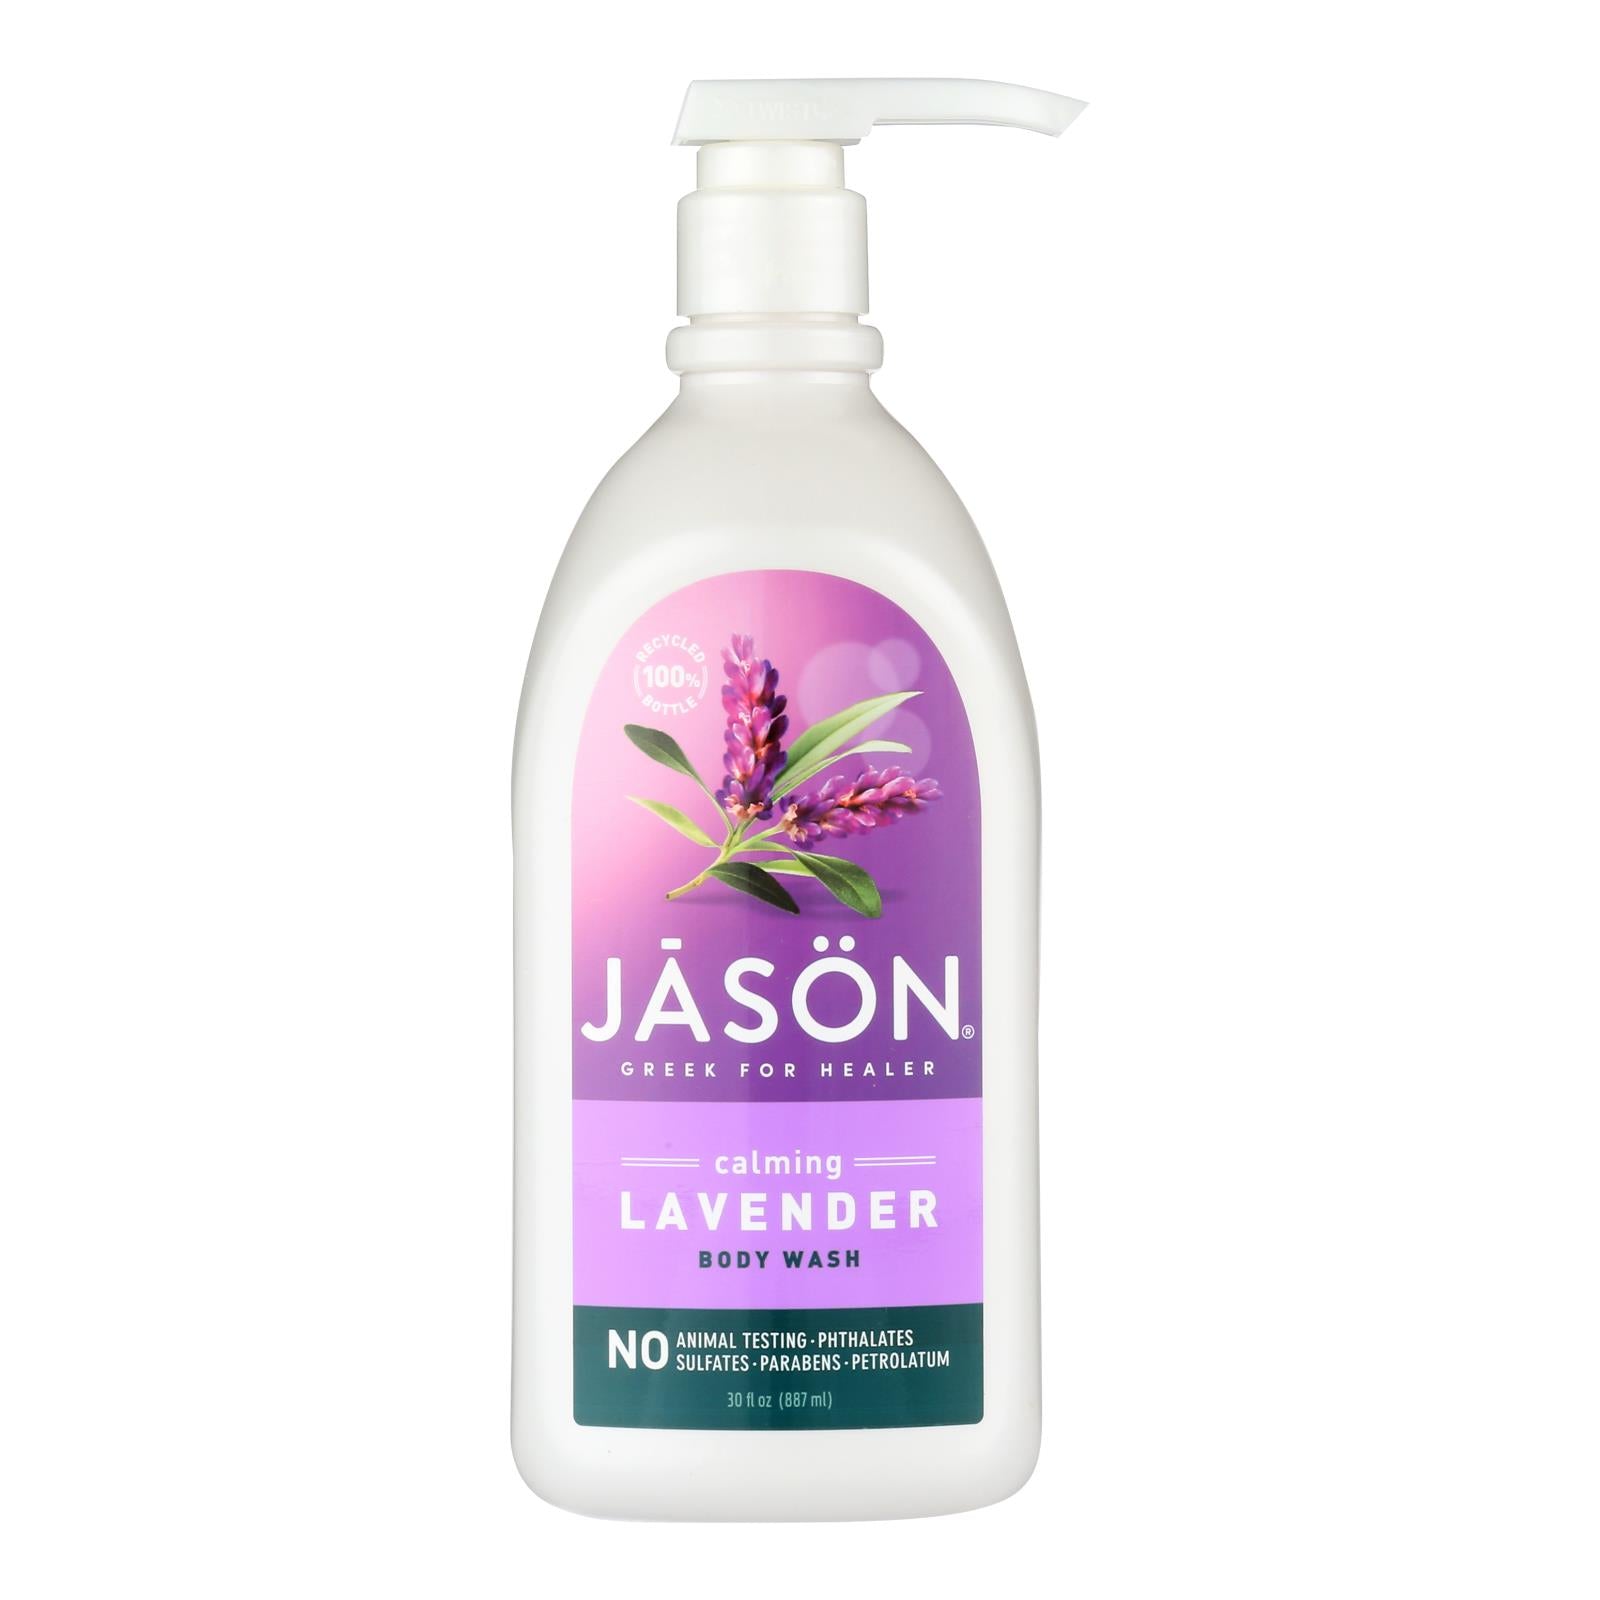 Jason Body Wash Pure Natural Calming Lavender - 30 Fl Oz